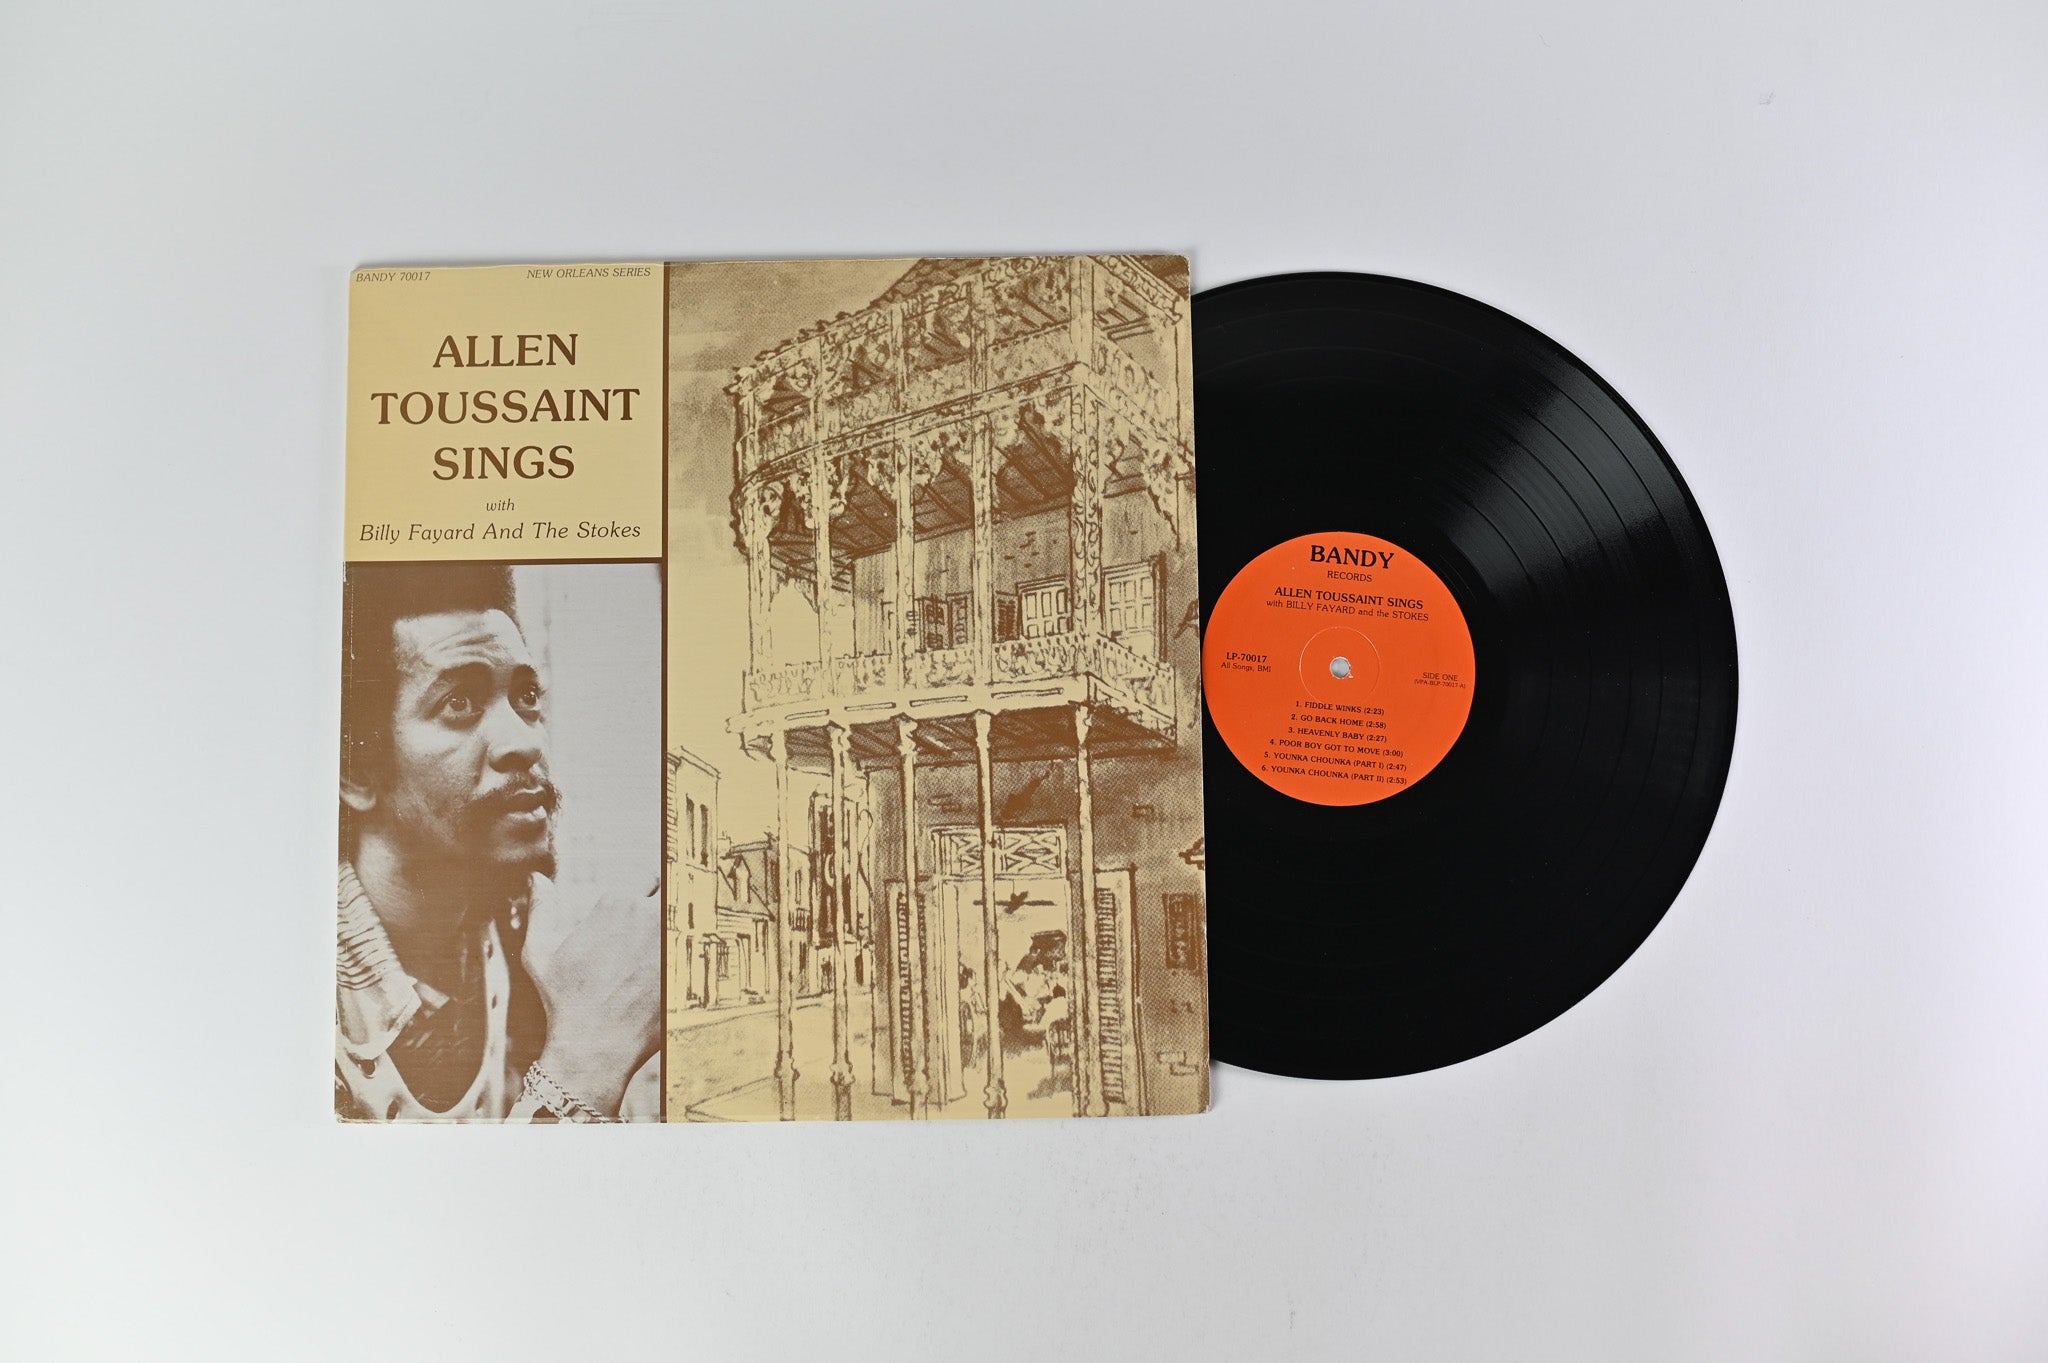 Allen Toussaint - Allen Toussaint Sings on Bandy